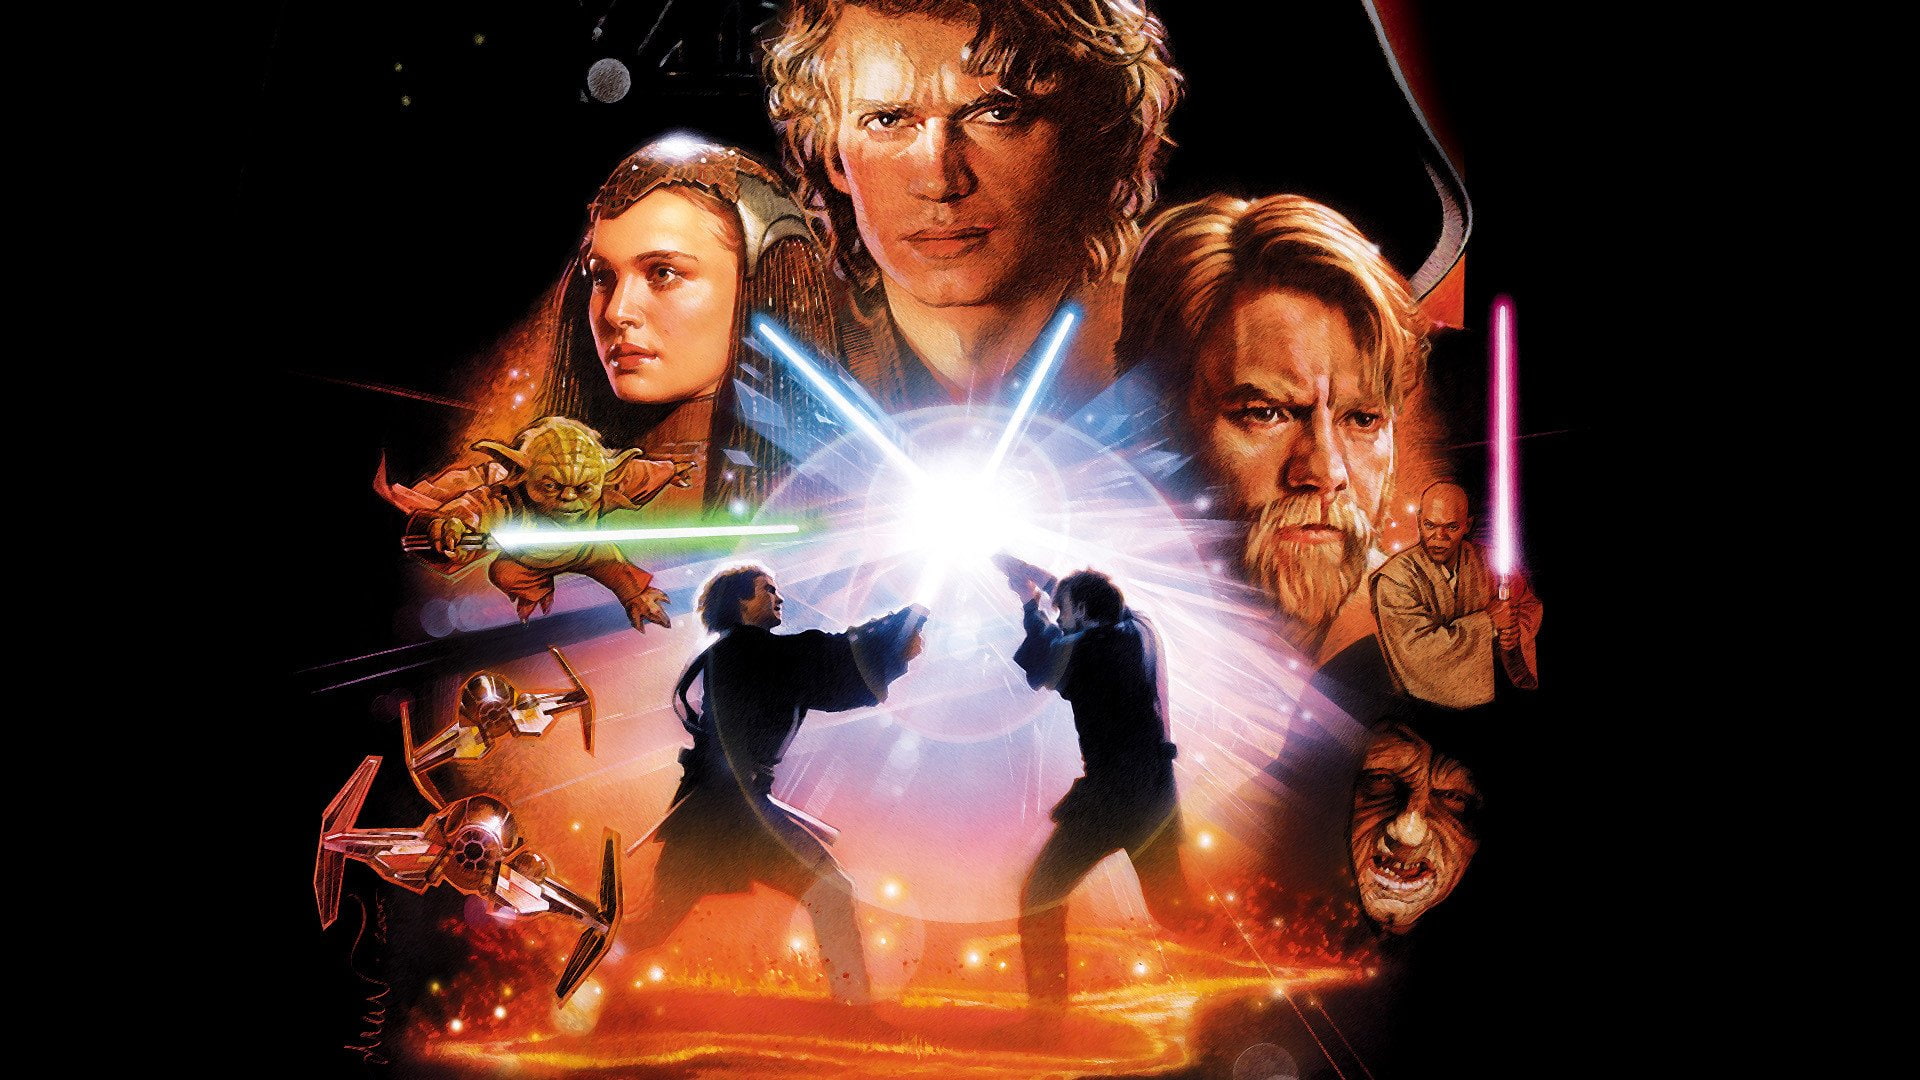 Star Wars, Star Wars Episode III: Revenge of the Sith